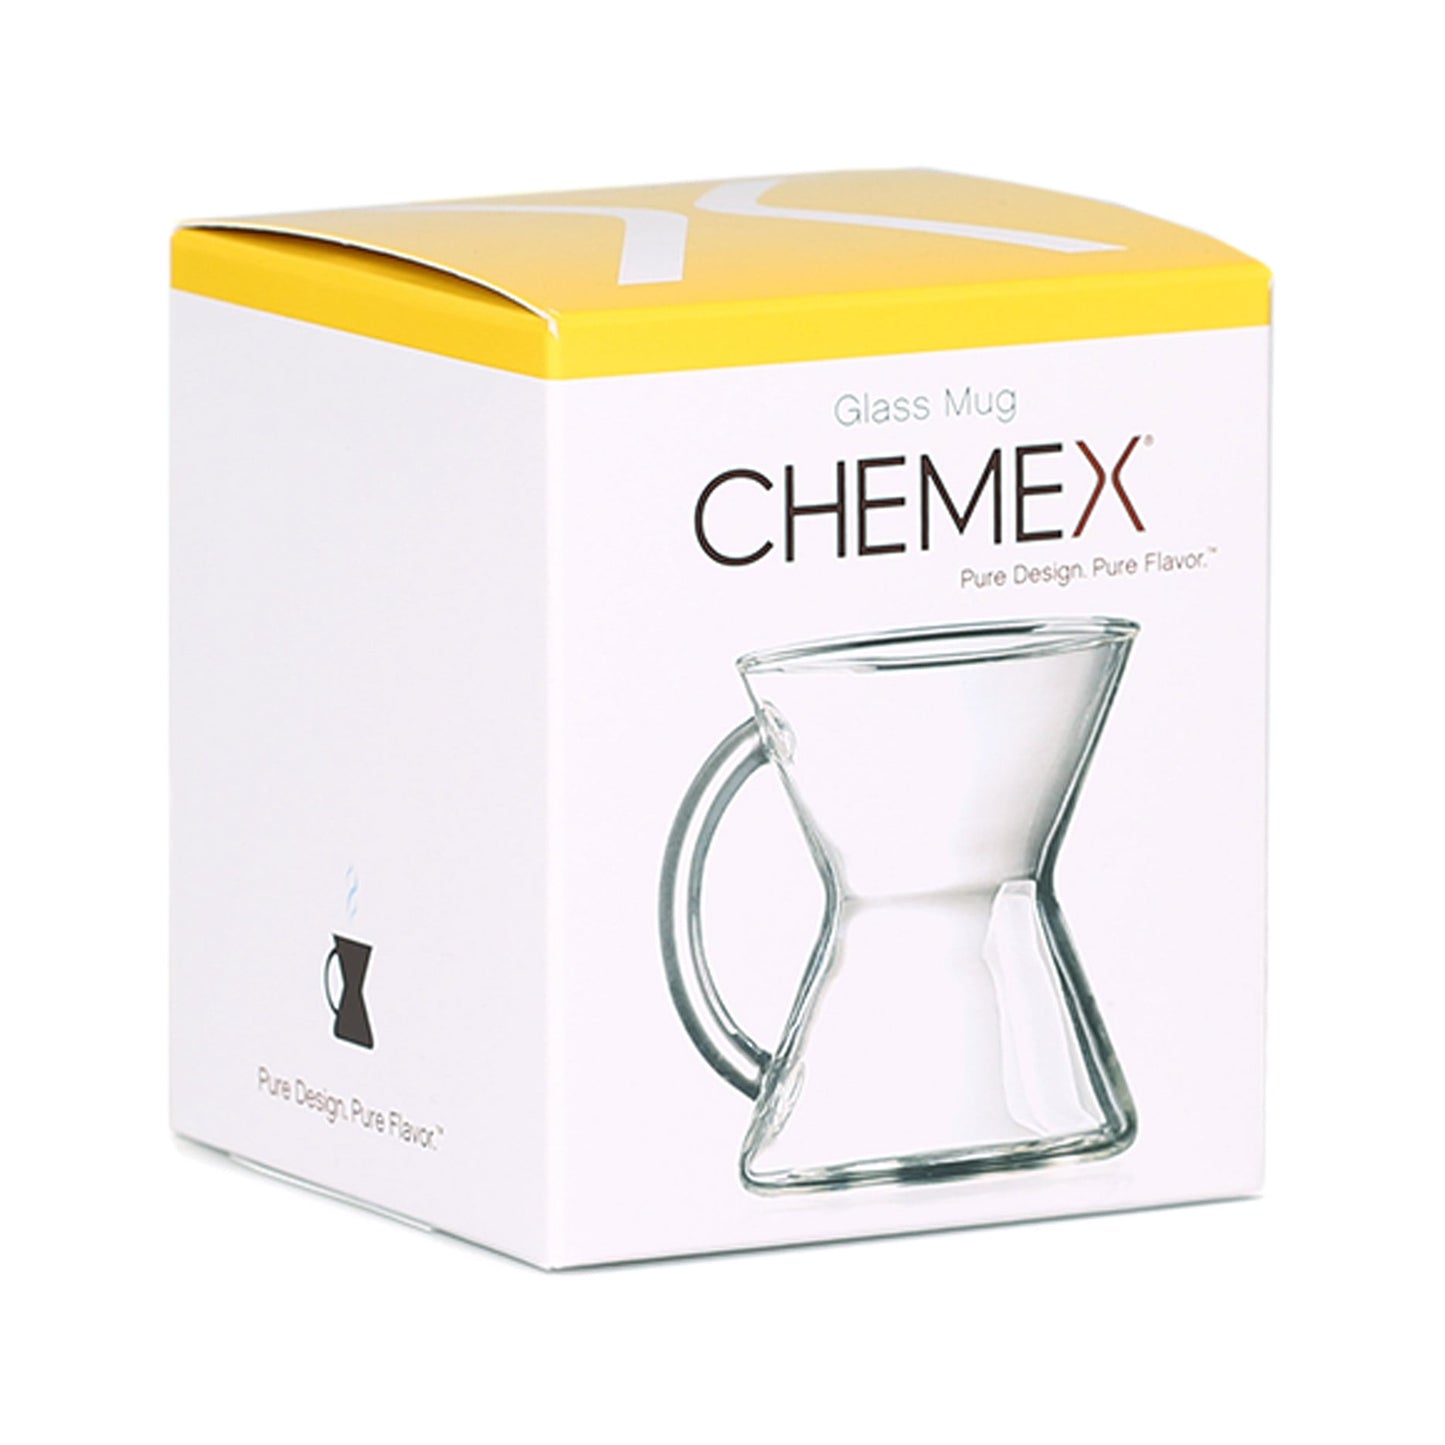 Chemex Glass Mug – hand-blown